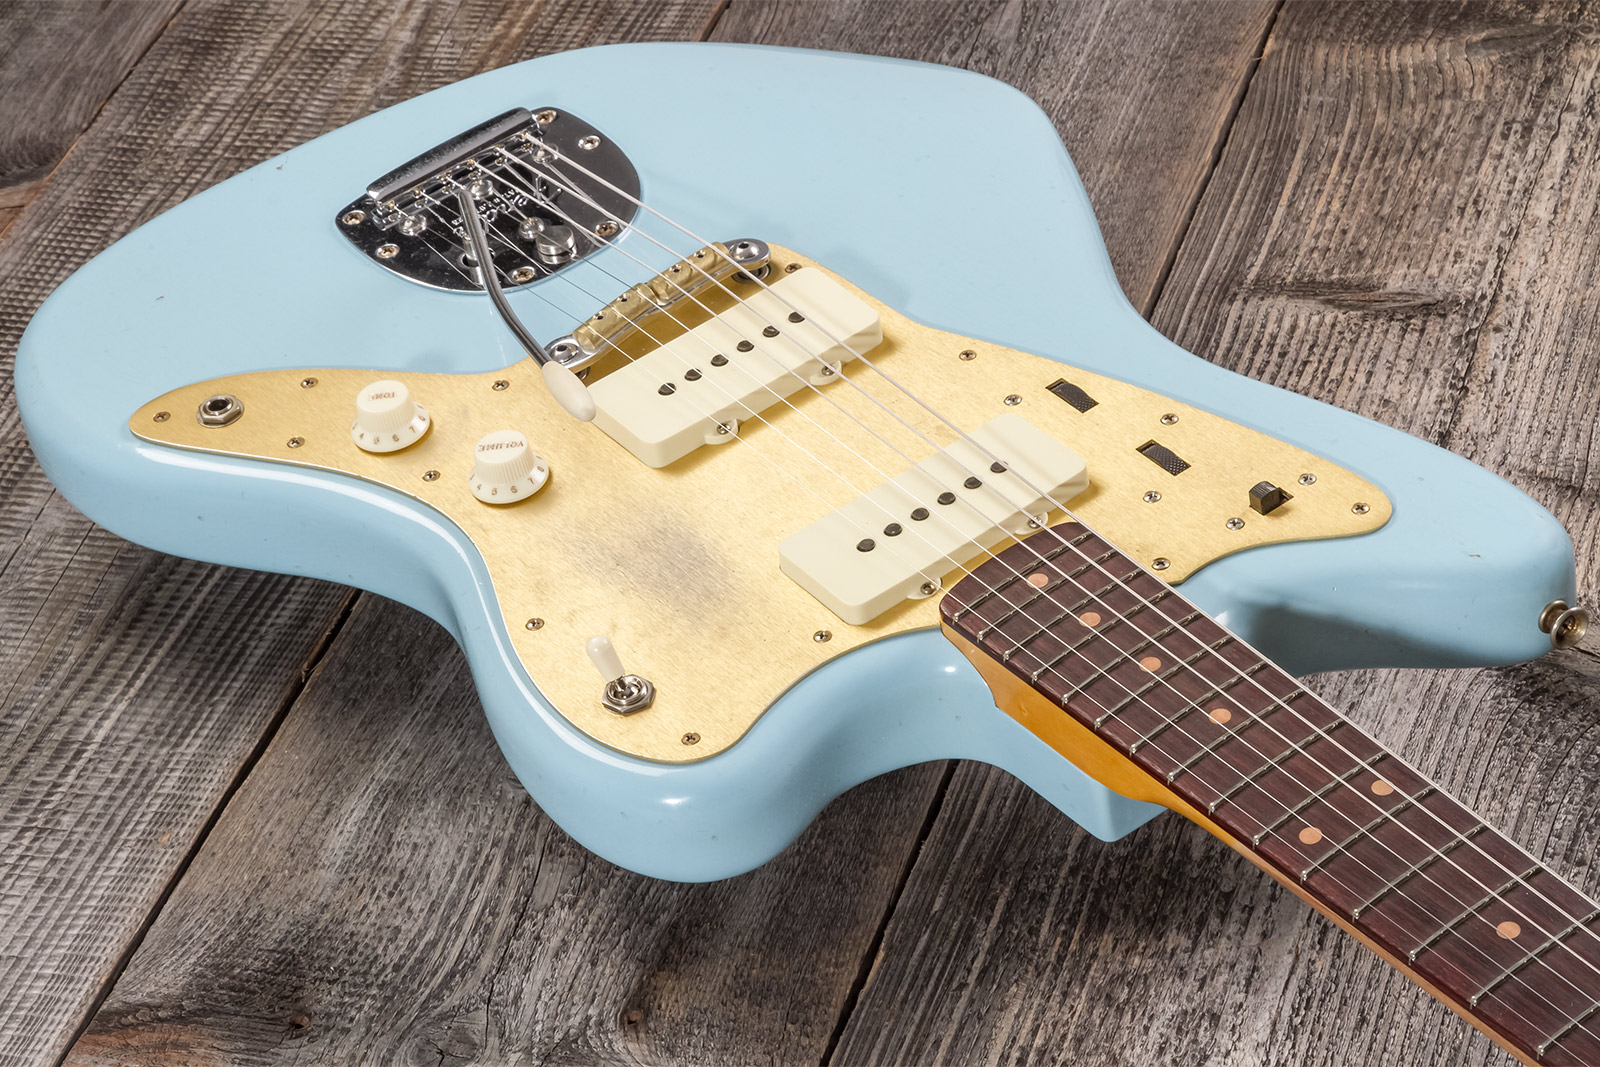 Fender Custom Shop Jazzmaster 1959 250k 2s Trem Rw #cz576203 - Journeyman Relic Aged Daphne Blue - Retro rock electric guitar - Variation 2